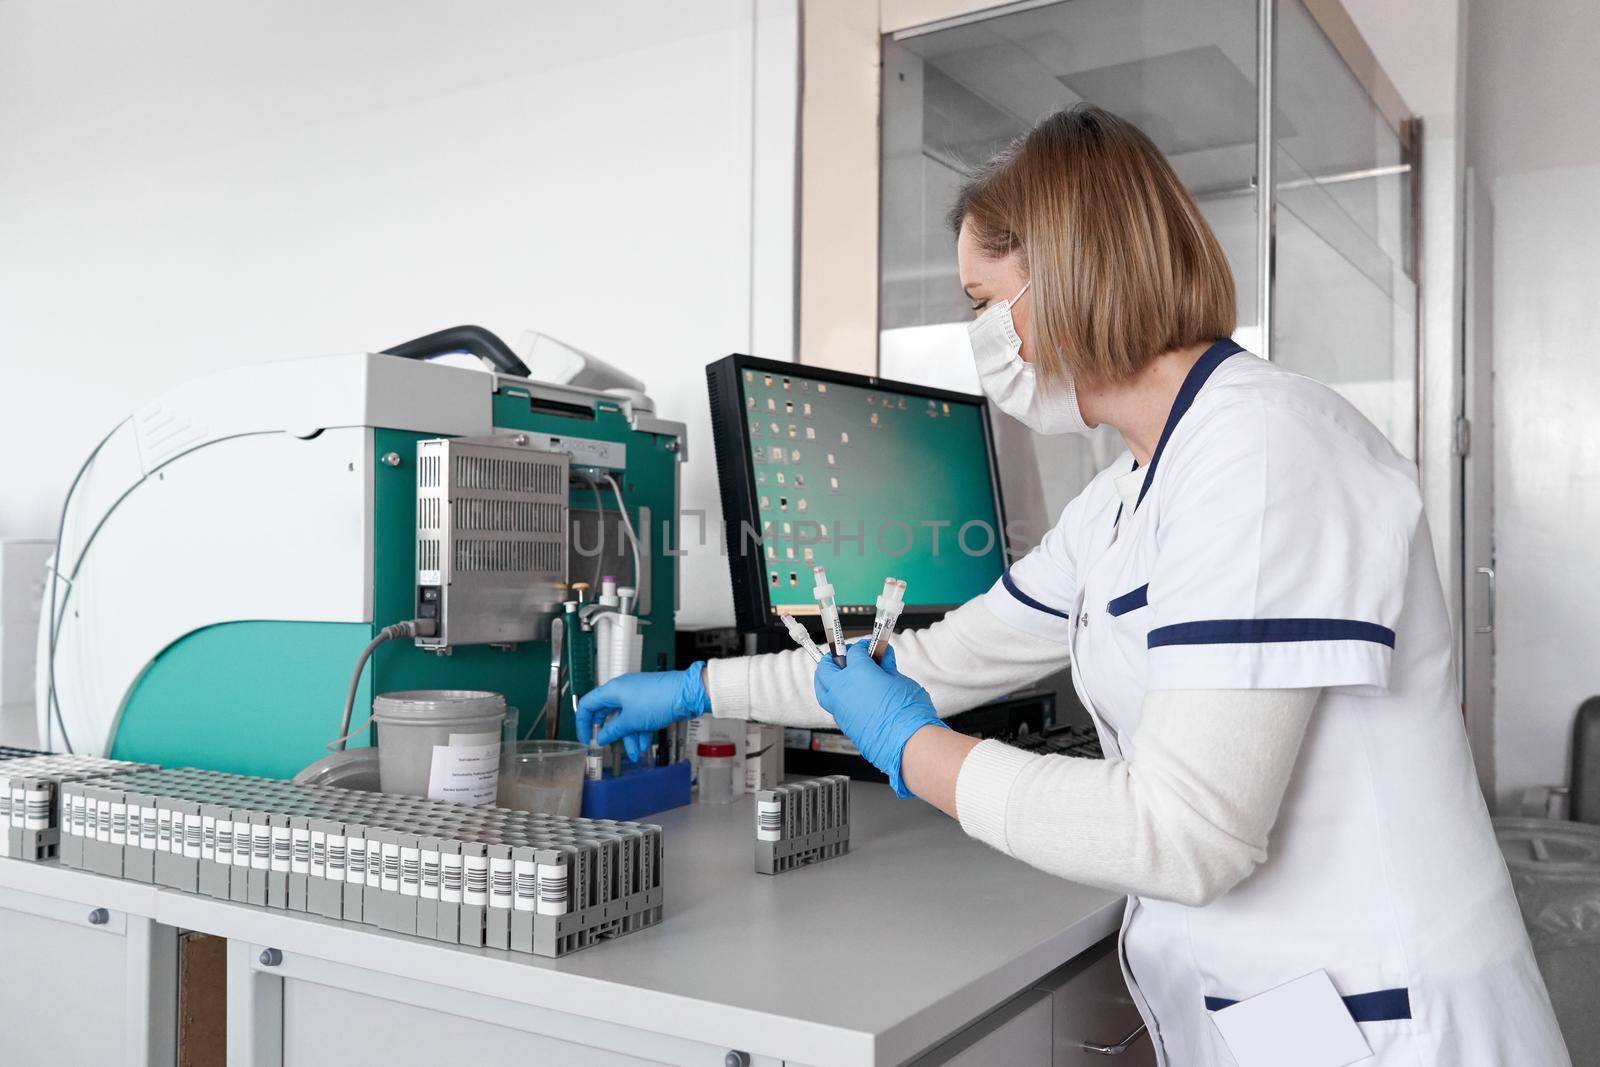 Hospital laboratory technician arranging samples in a centrifuge reaction vessel